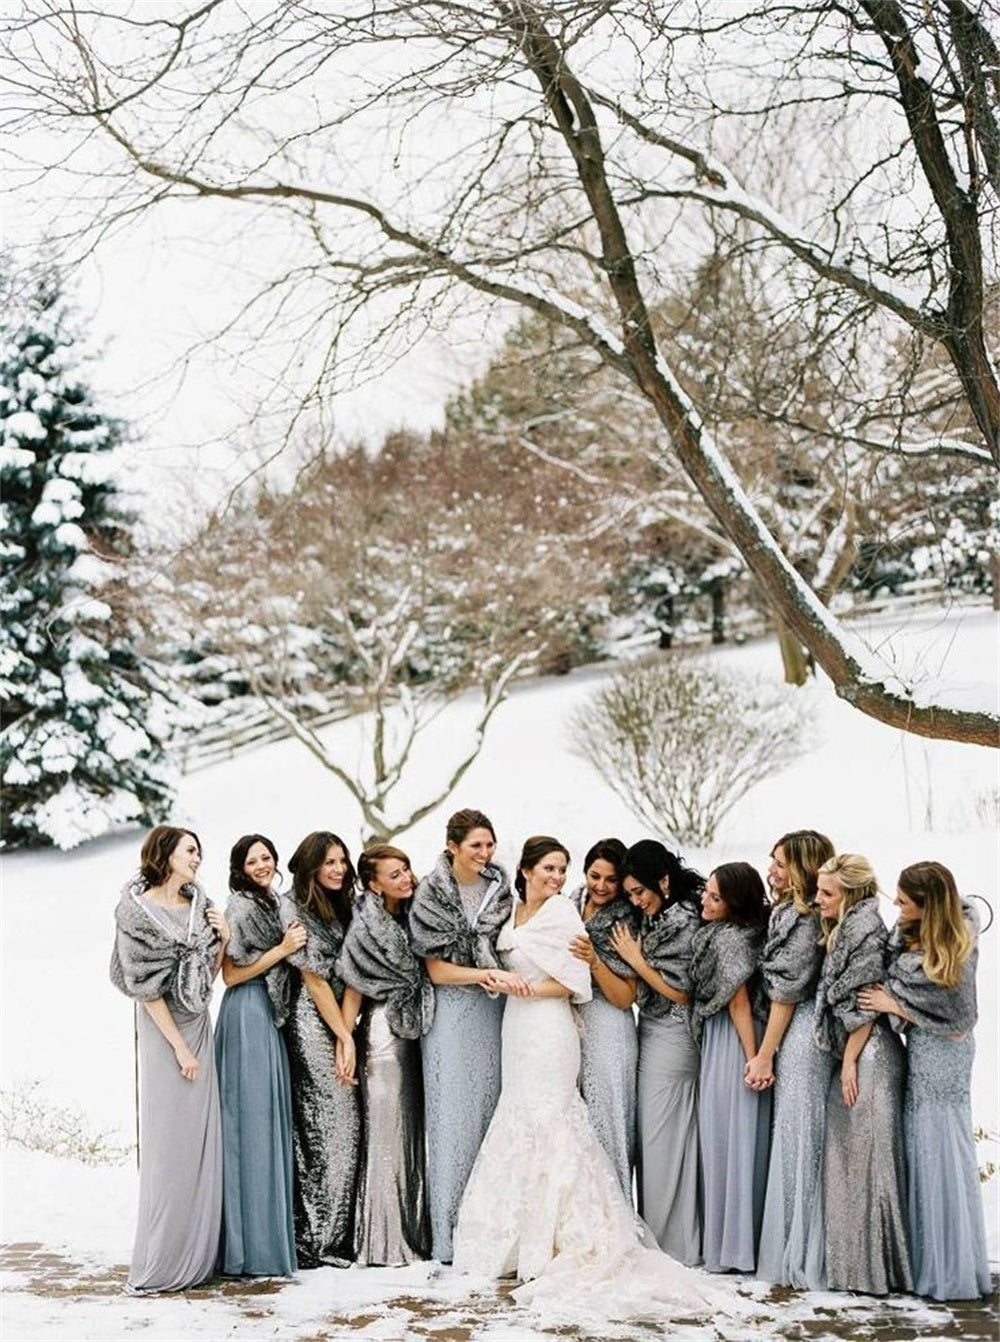 Winter White Wonderland Wedding Dresses